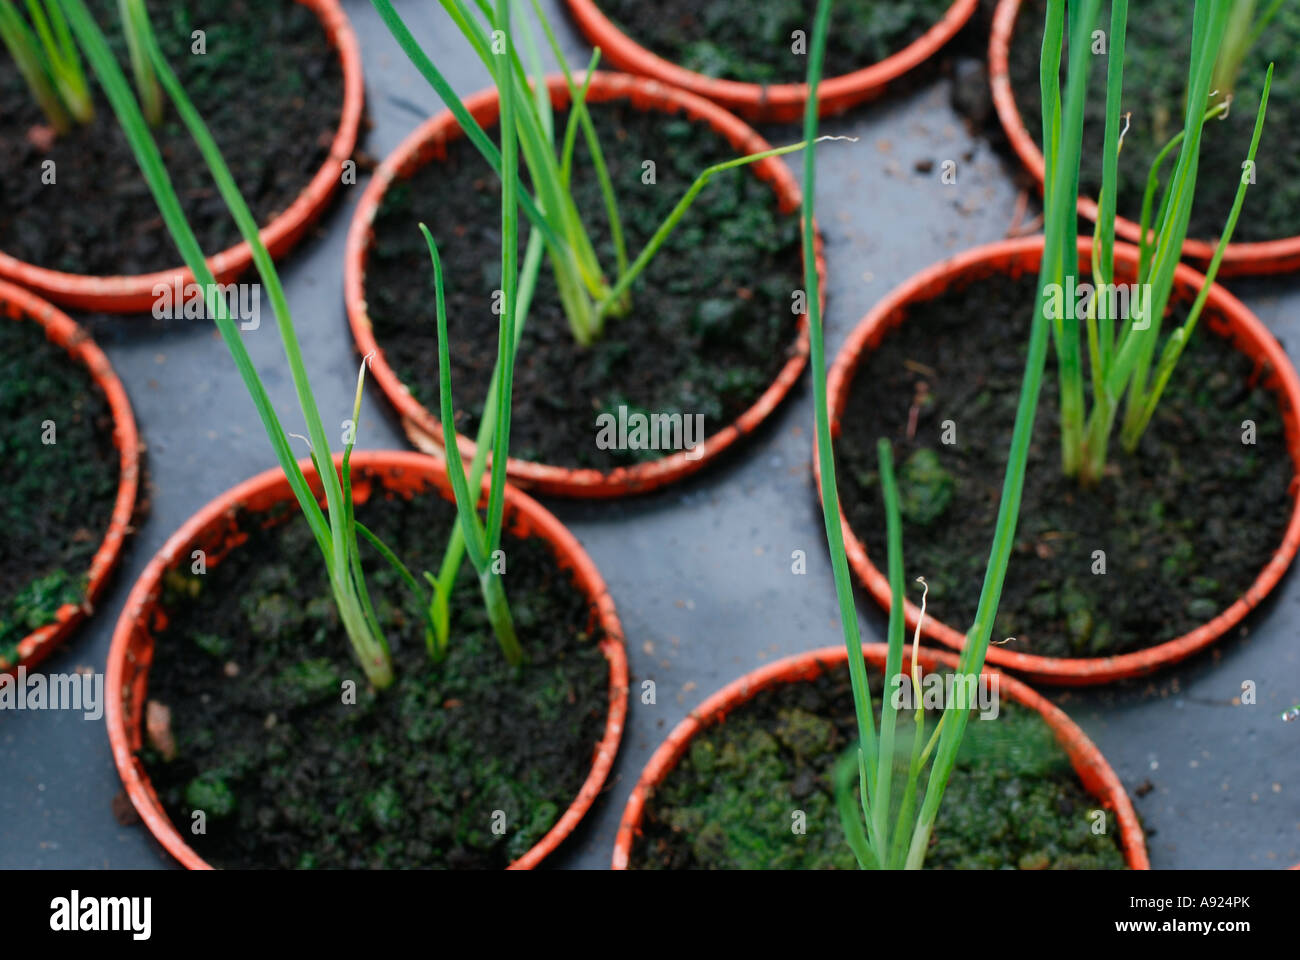 Leek seedlings Stock Photo